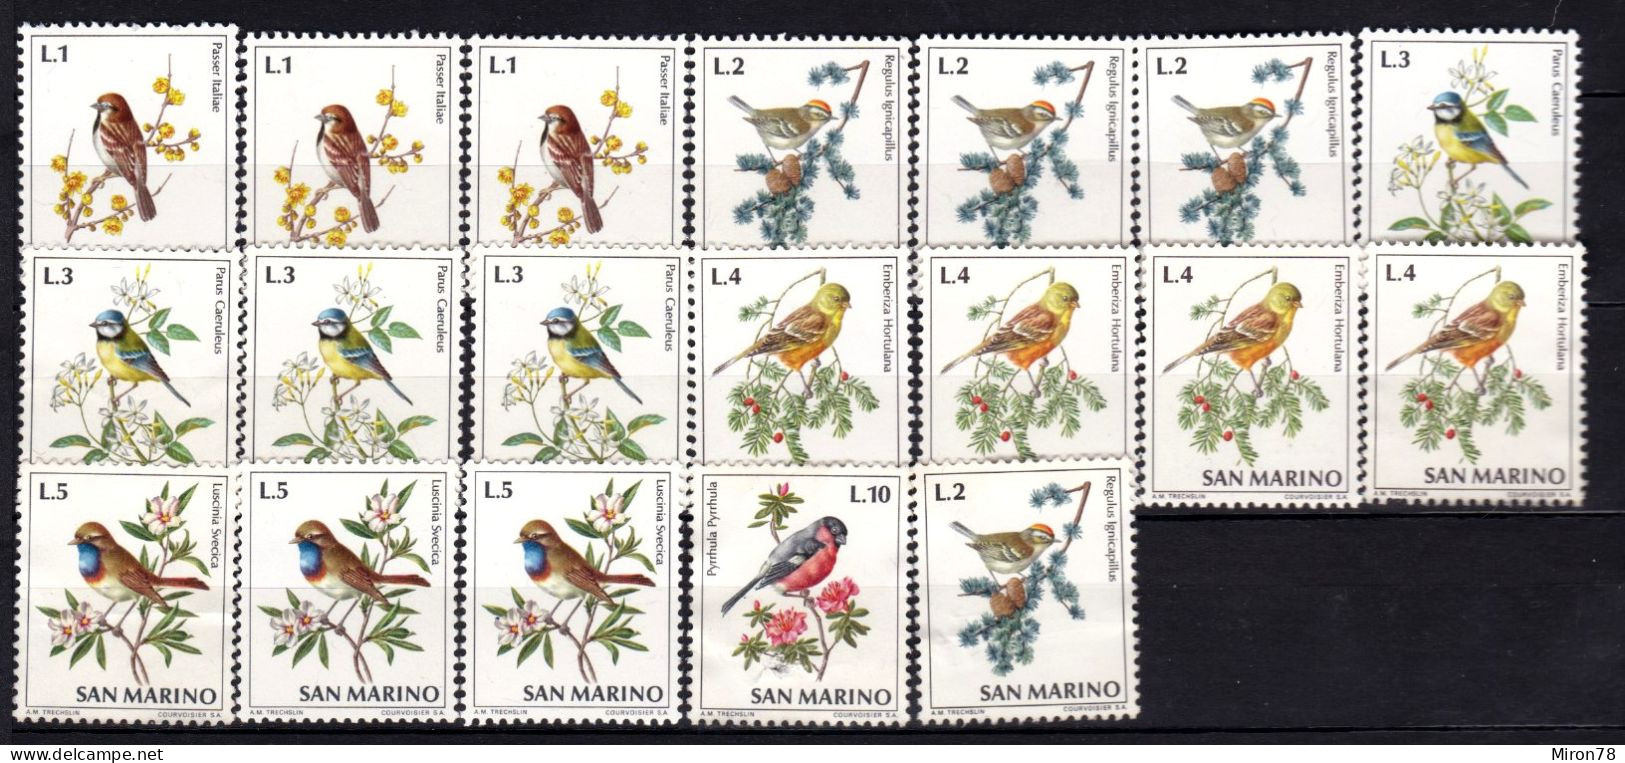 Stamps SAN MARINO MNH Lot37 - Nuevos